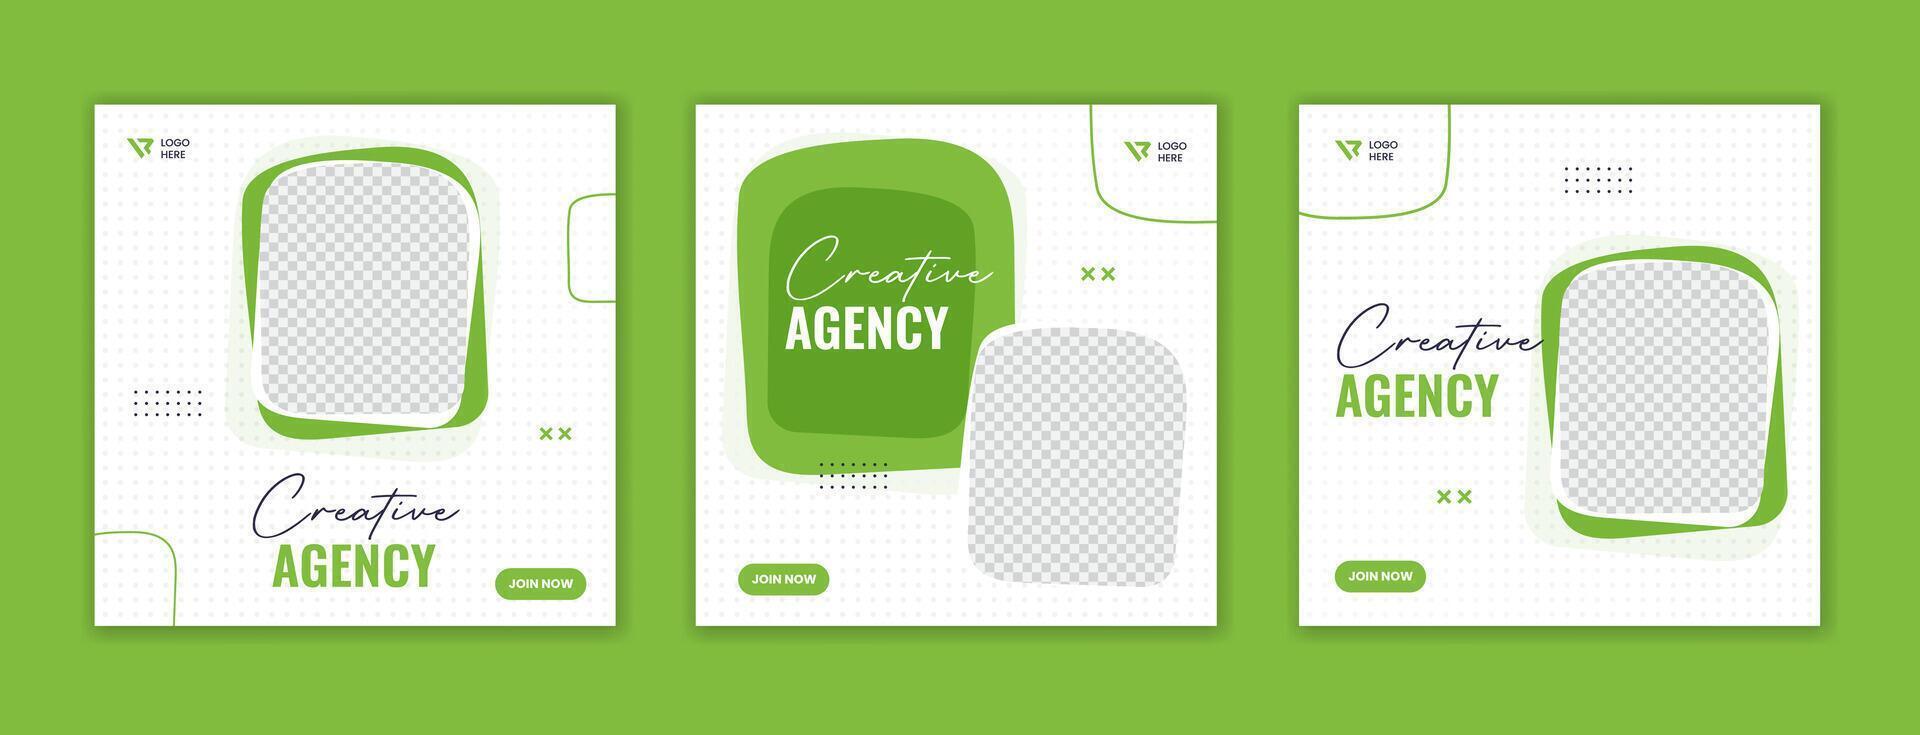 Green organic shape corporate social media post design, creative agency advertisement template vector